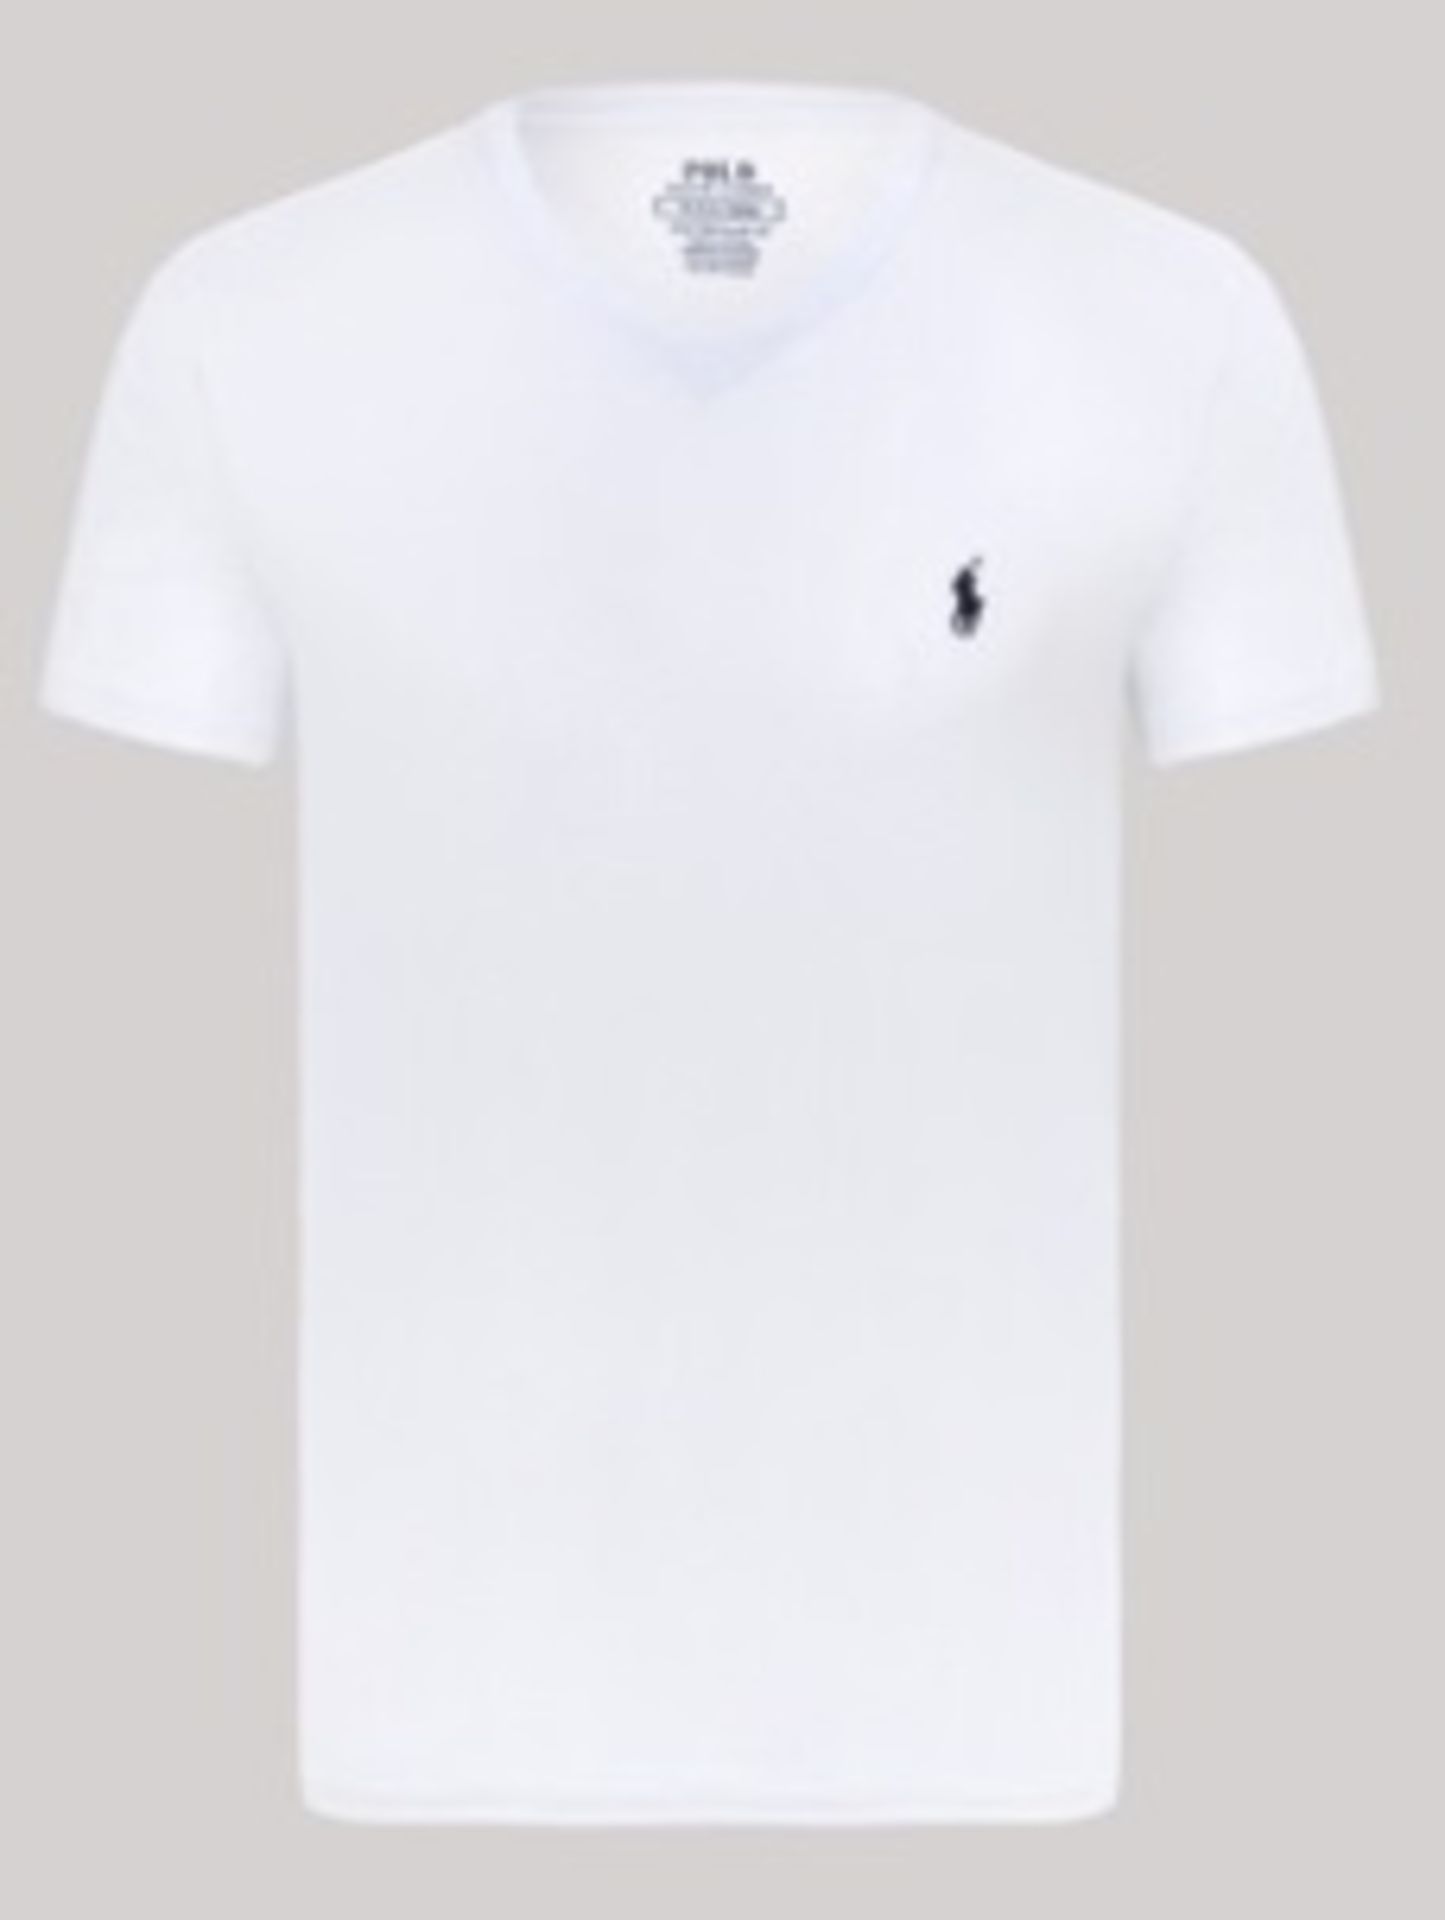 Brand New White Ralph Lauren T-Shirt Size Extra Large